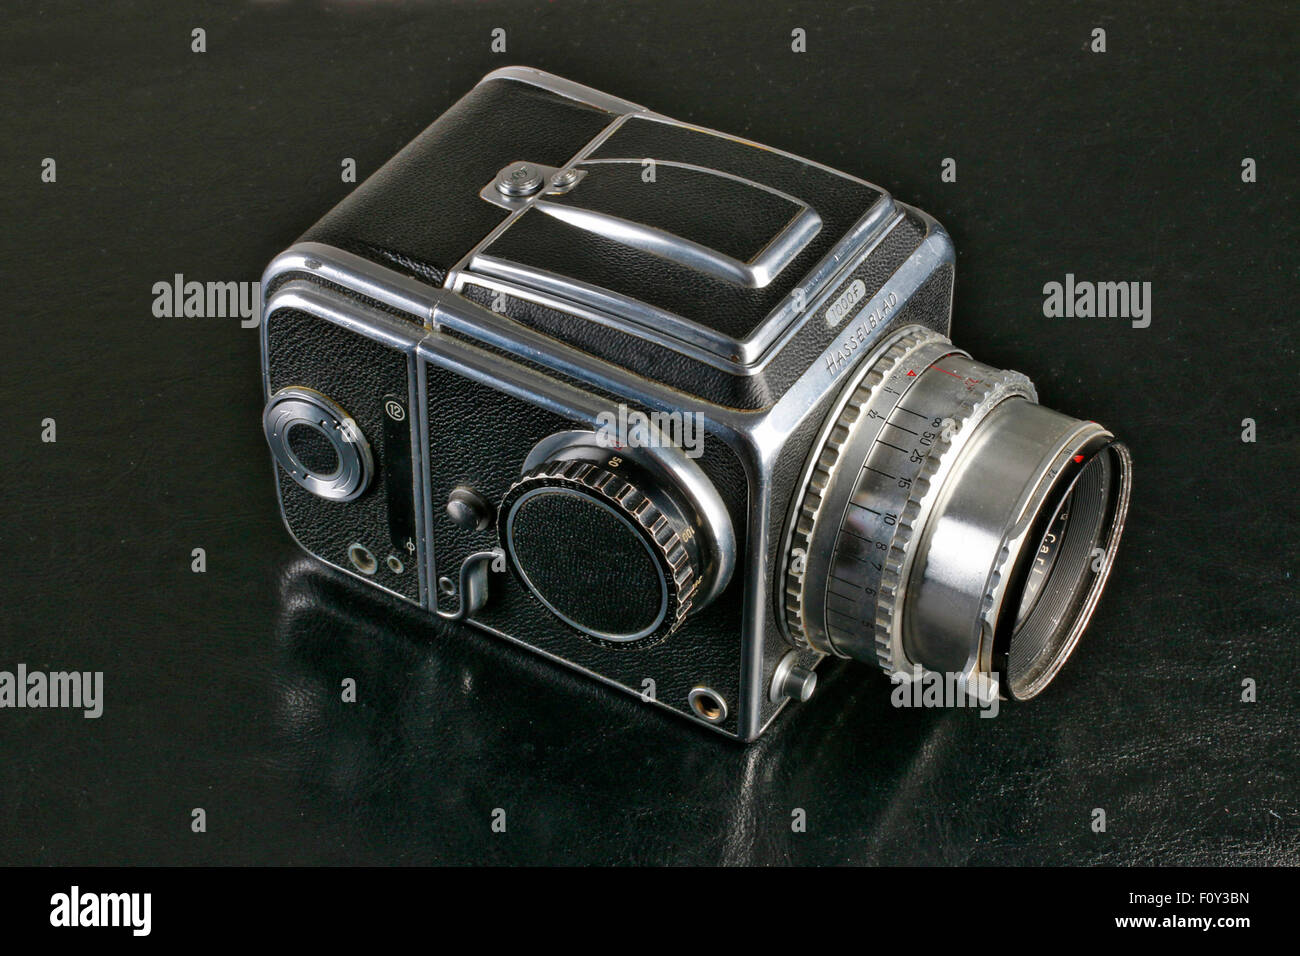 Hasselblad 1000f medium format camera with 80mm f 1:2.8 planar lens. on  dark background Stock Photo - Alamy